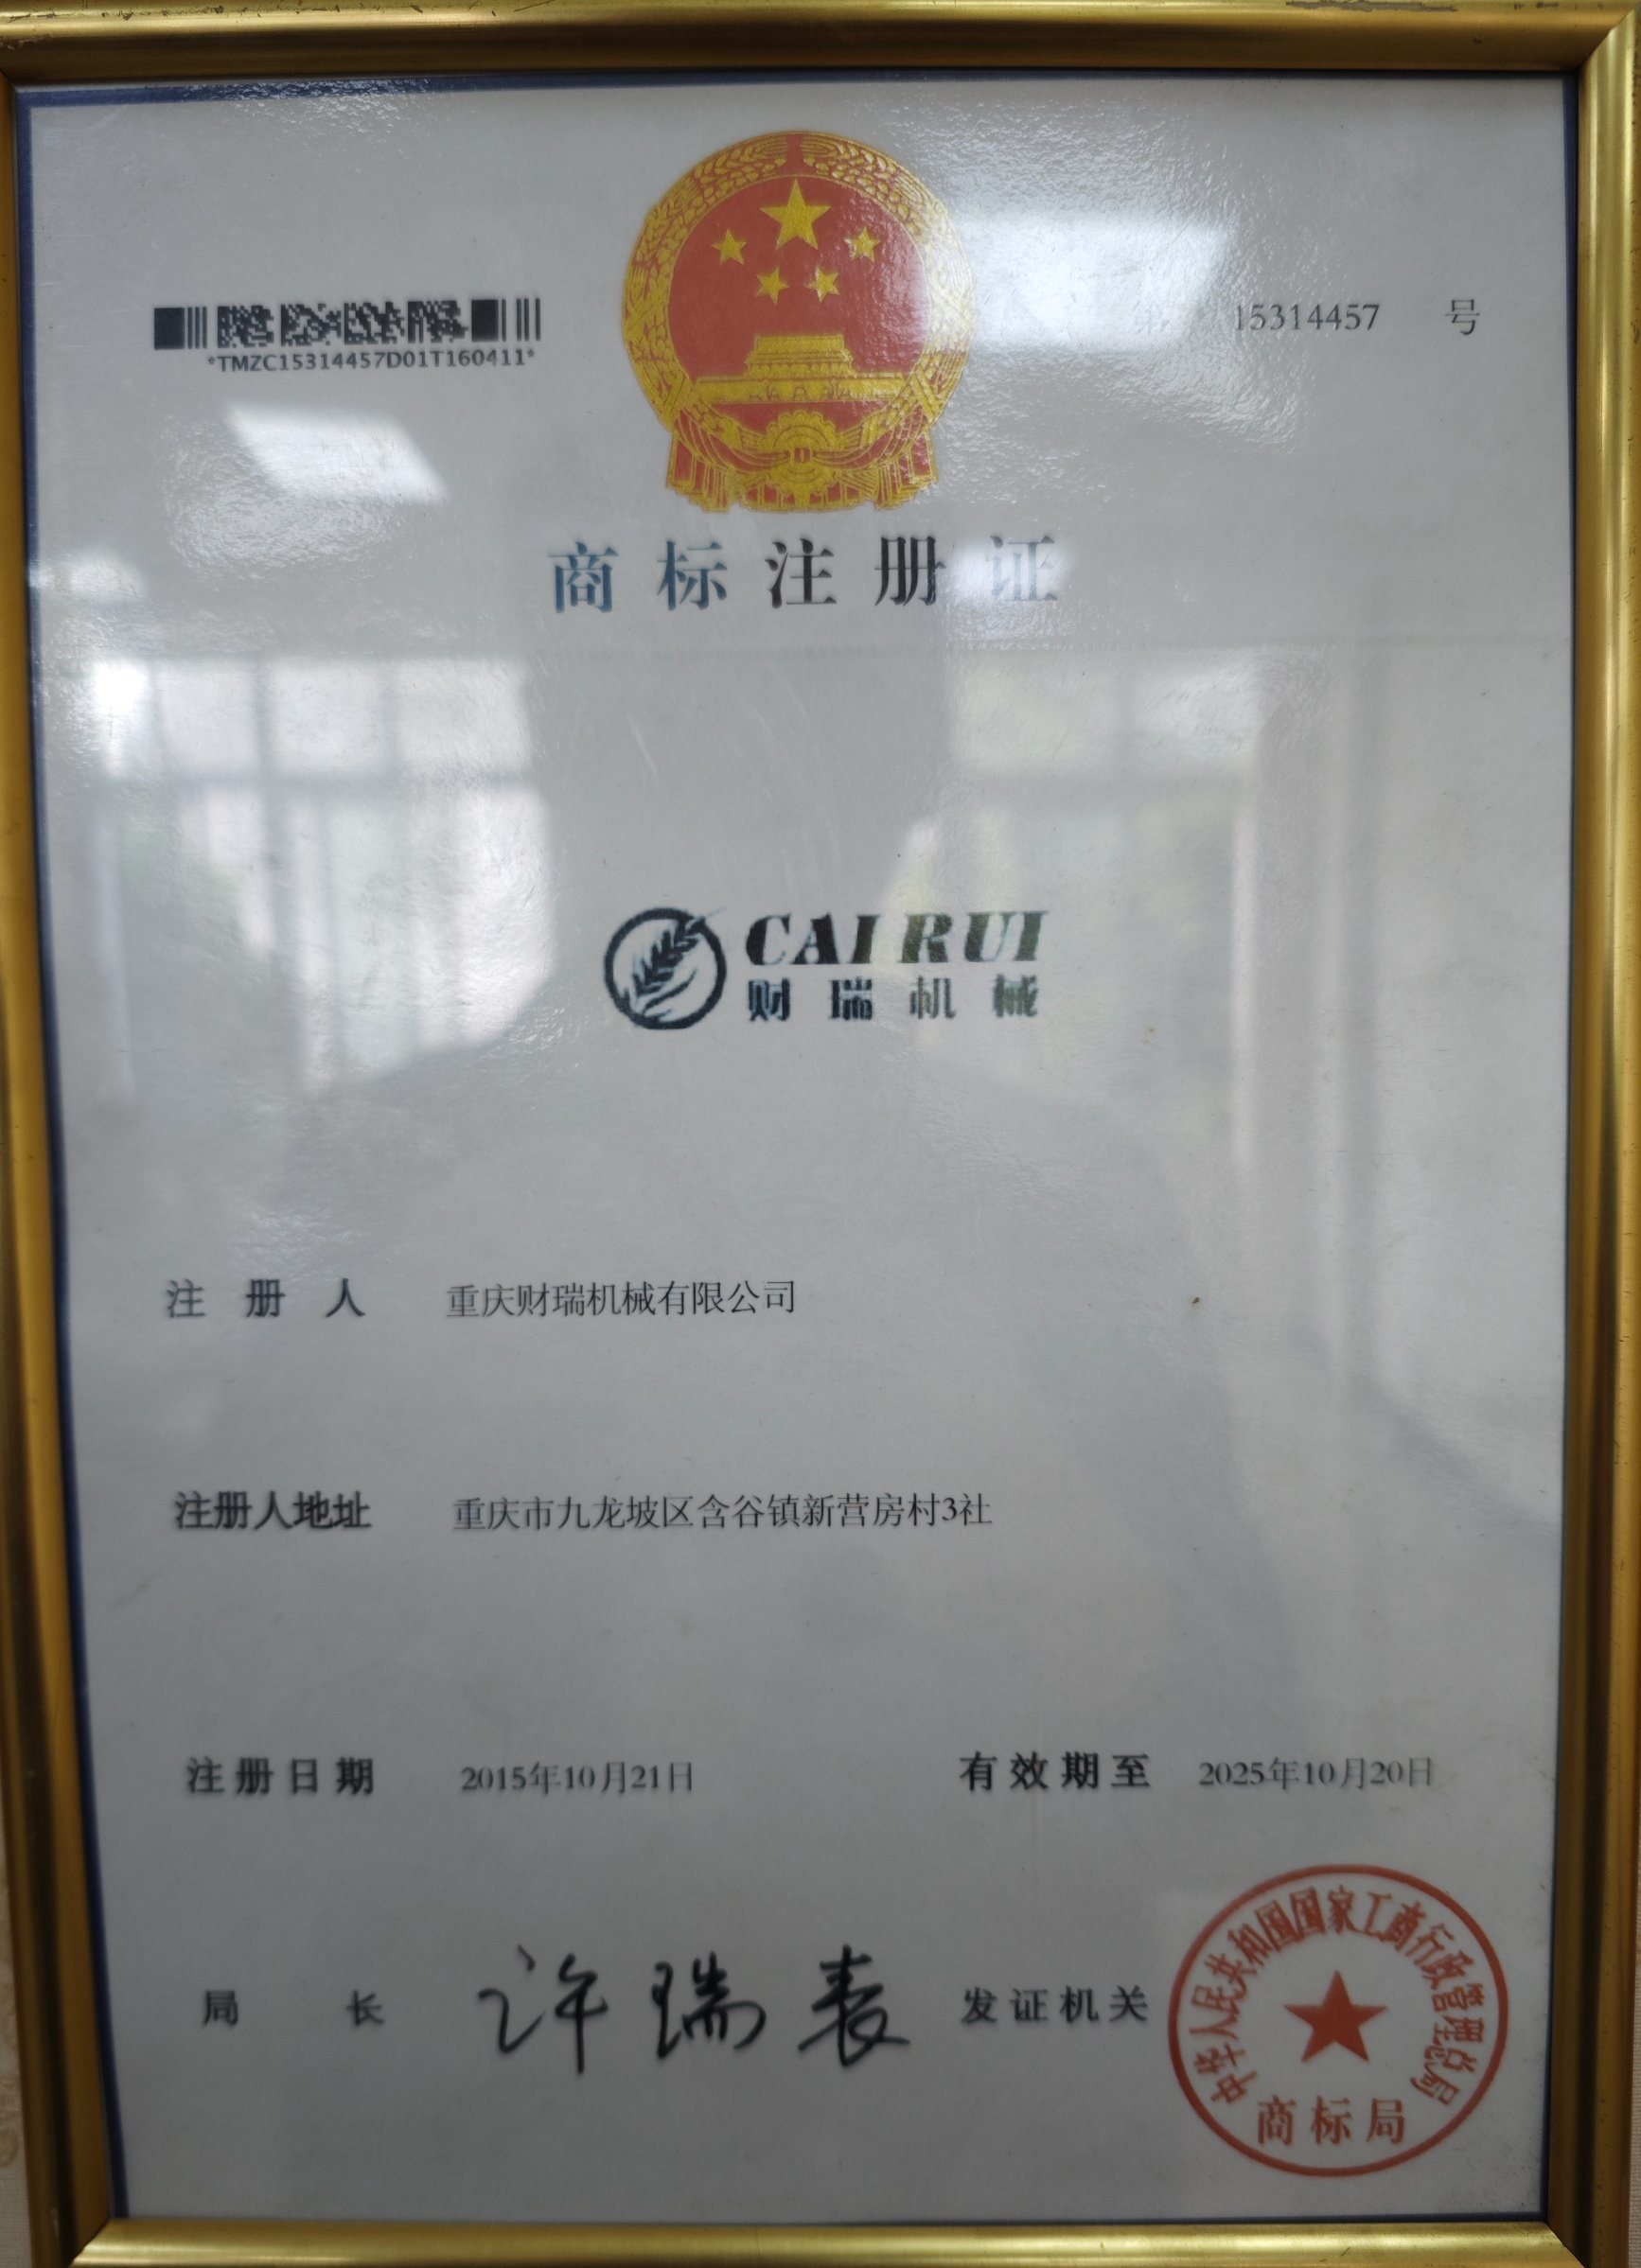 Trademark registration certificate(Cairui)